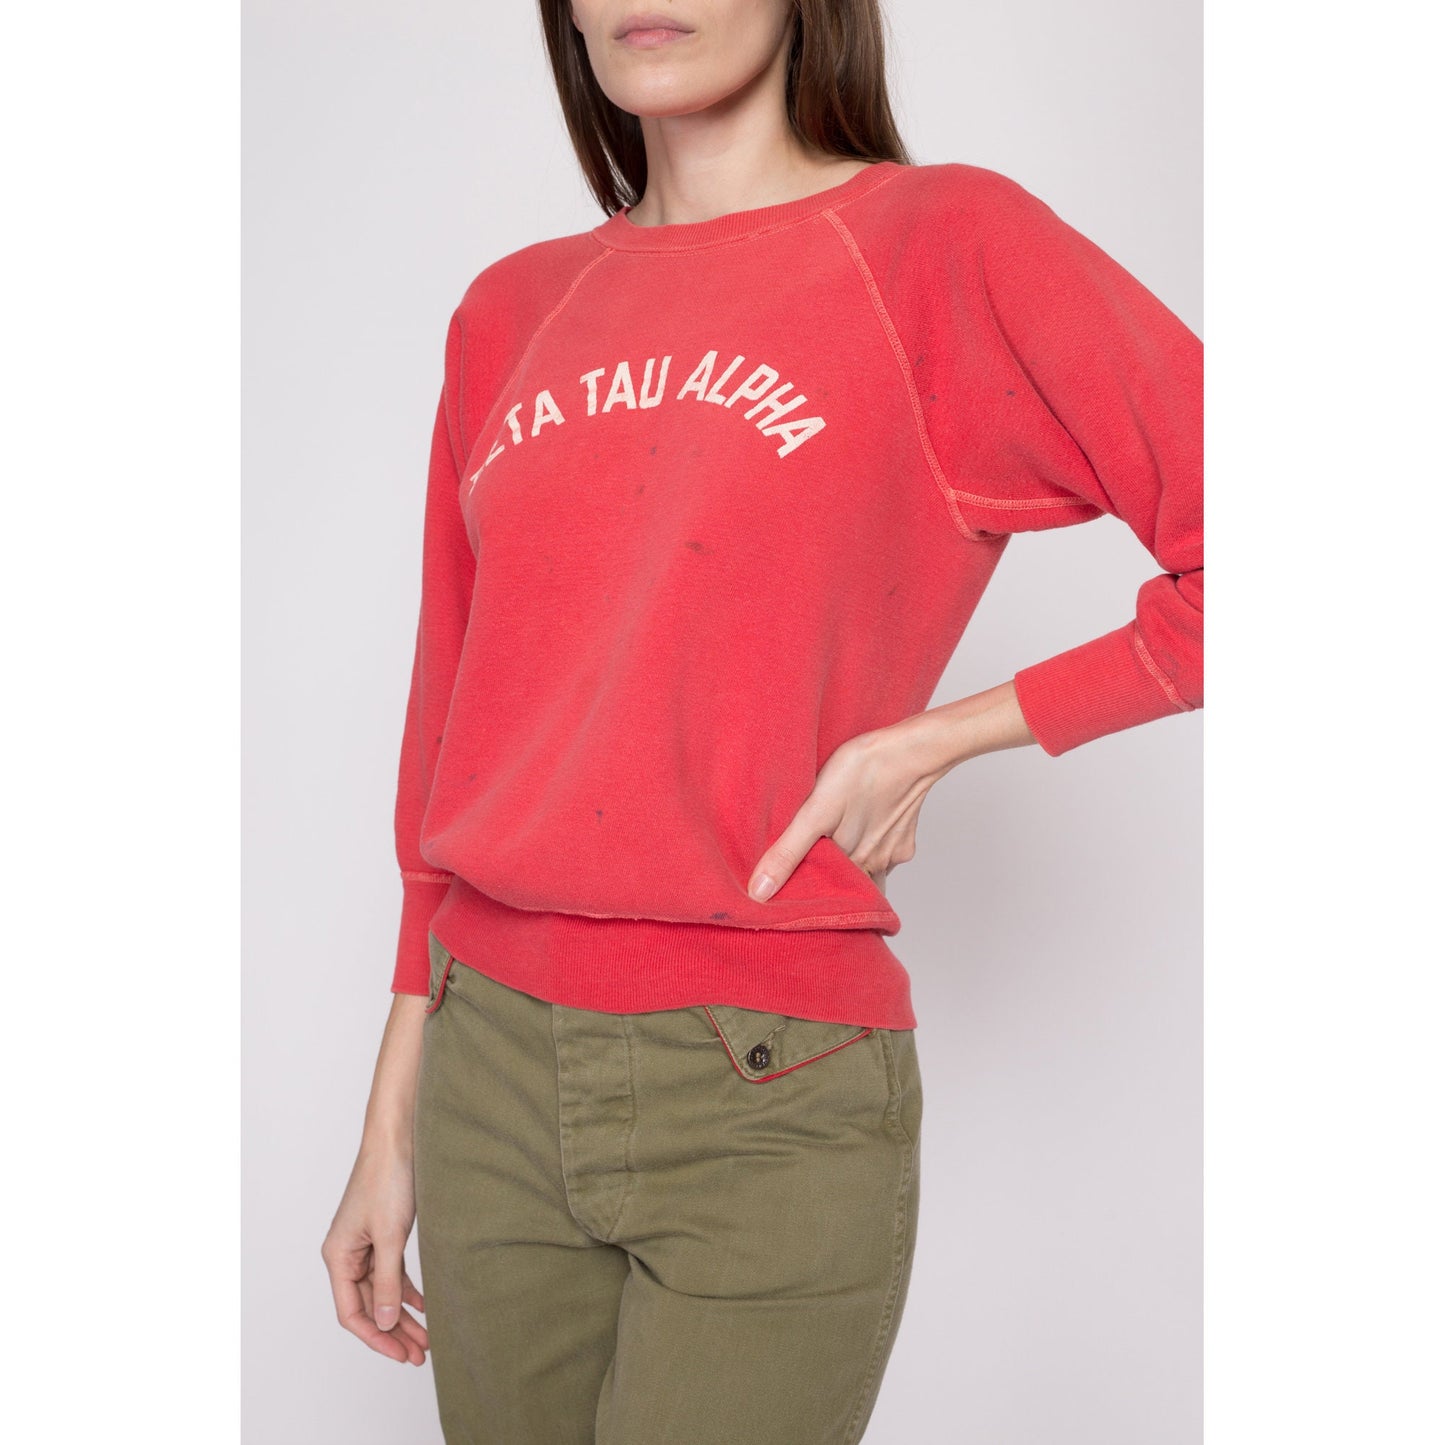 S| 1960s Zeta Tau Alpha Sorority Sweatshirt - Petite Small | Vintage 60s Pink Red Distressed Raglan Sleeve College Crewneck